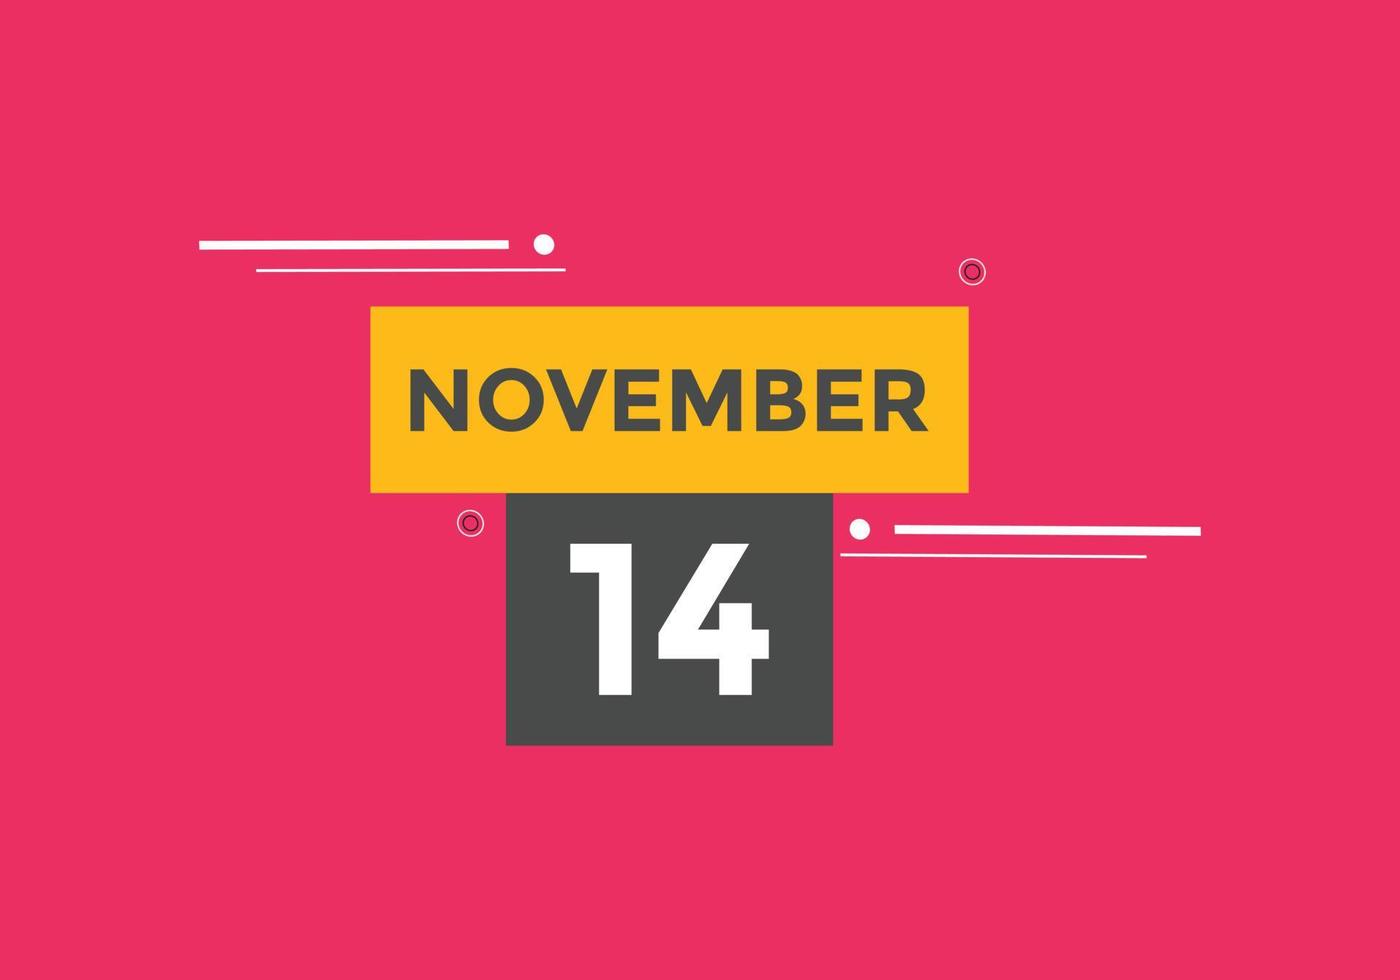 november 14 calendar reminder. 14th november daily calendar icon template. Calendar 14th november icon Design template. Vector illustration